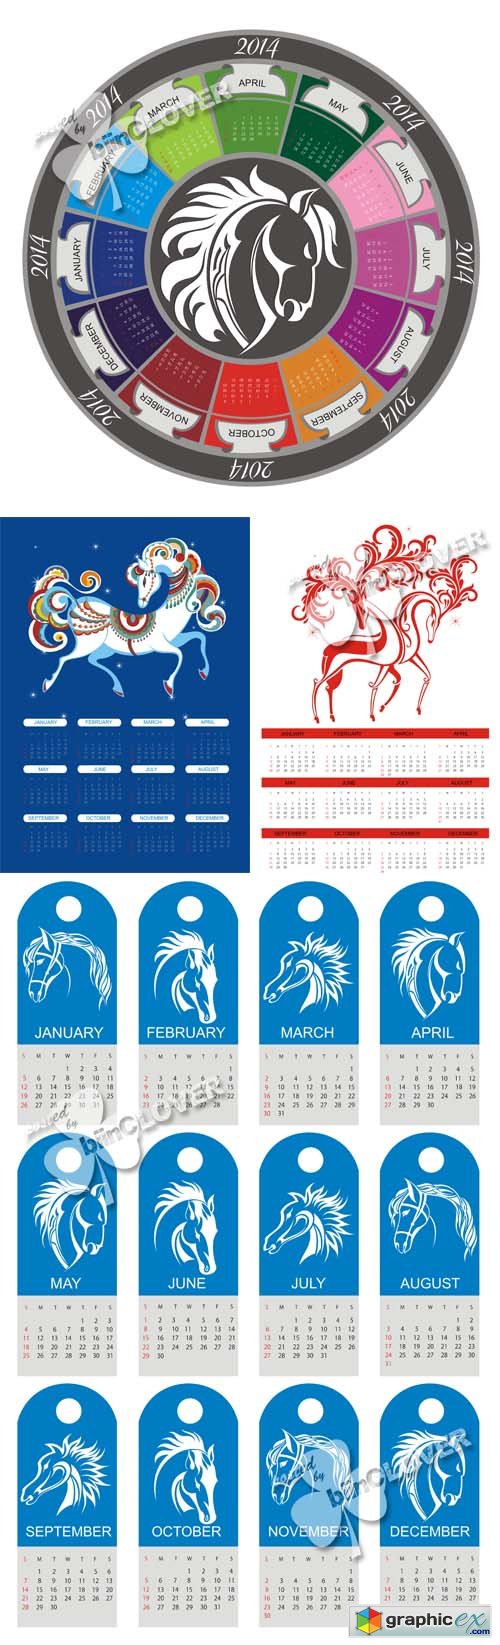 Vector 2014 calendar with horse symbols 0501